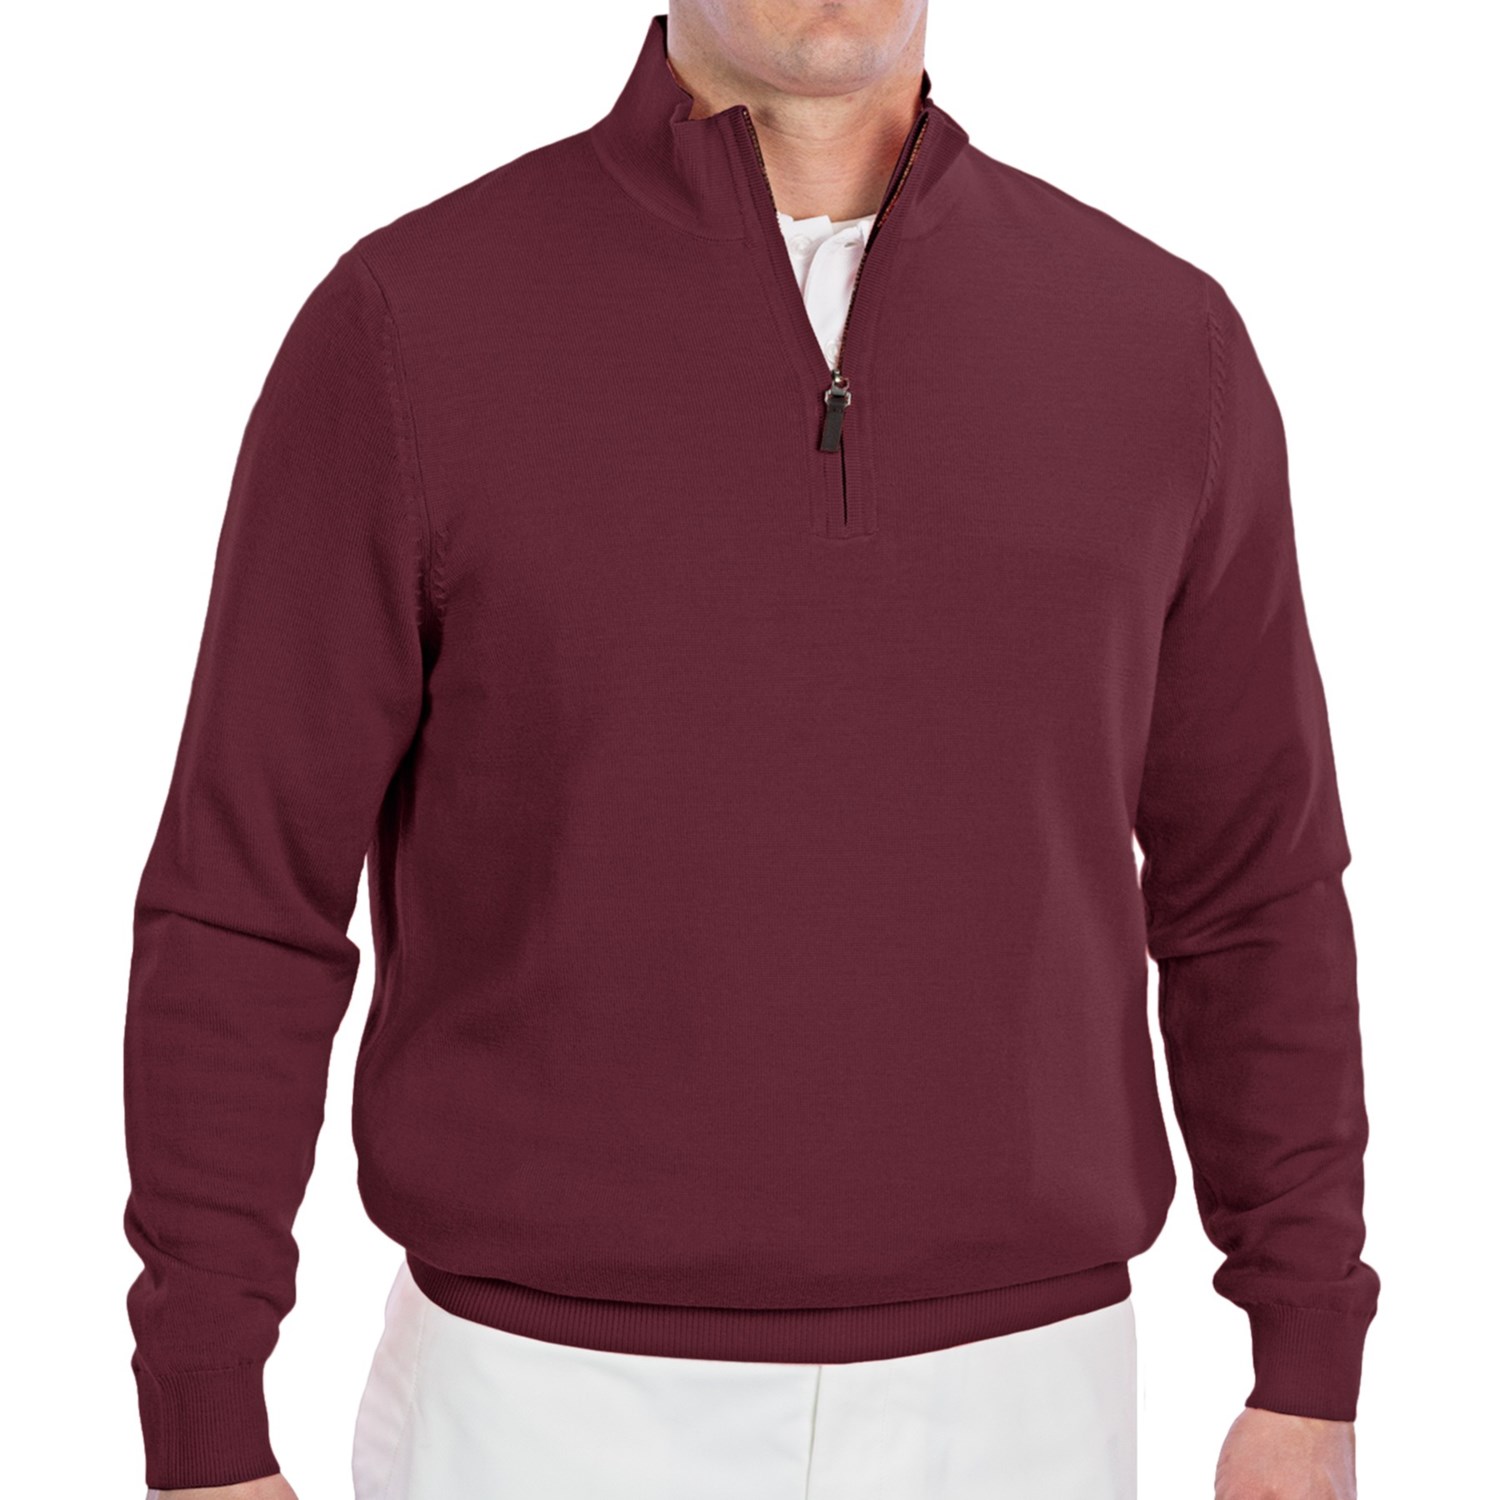 Fairway & Greene Wind Sweater - Merino Wool, Zip Neck (For Men) - Save 54%